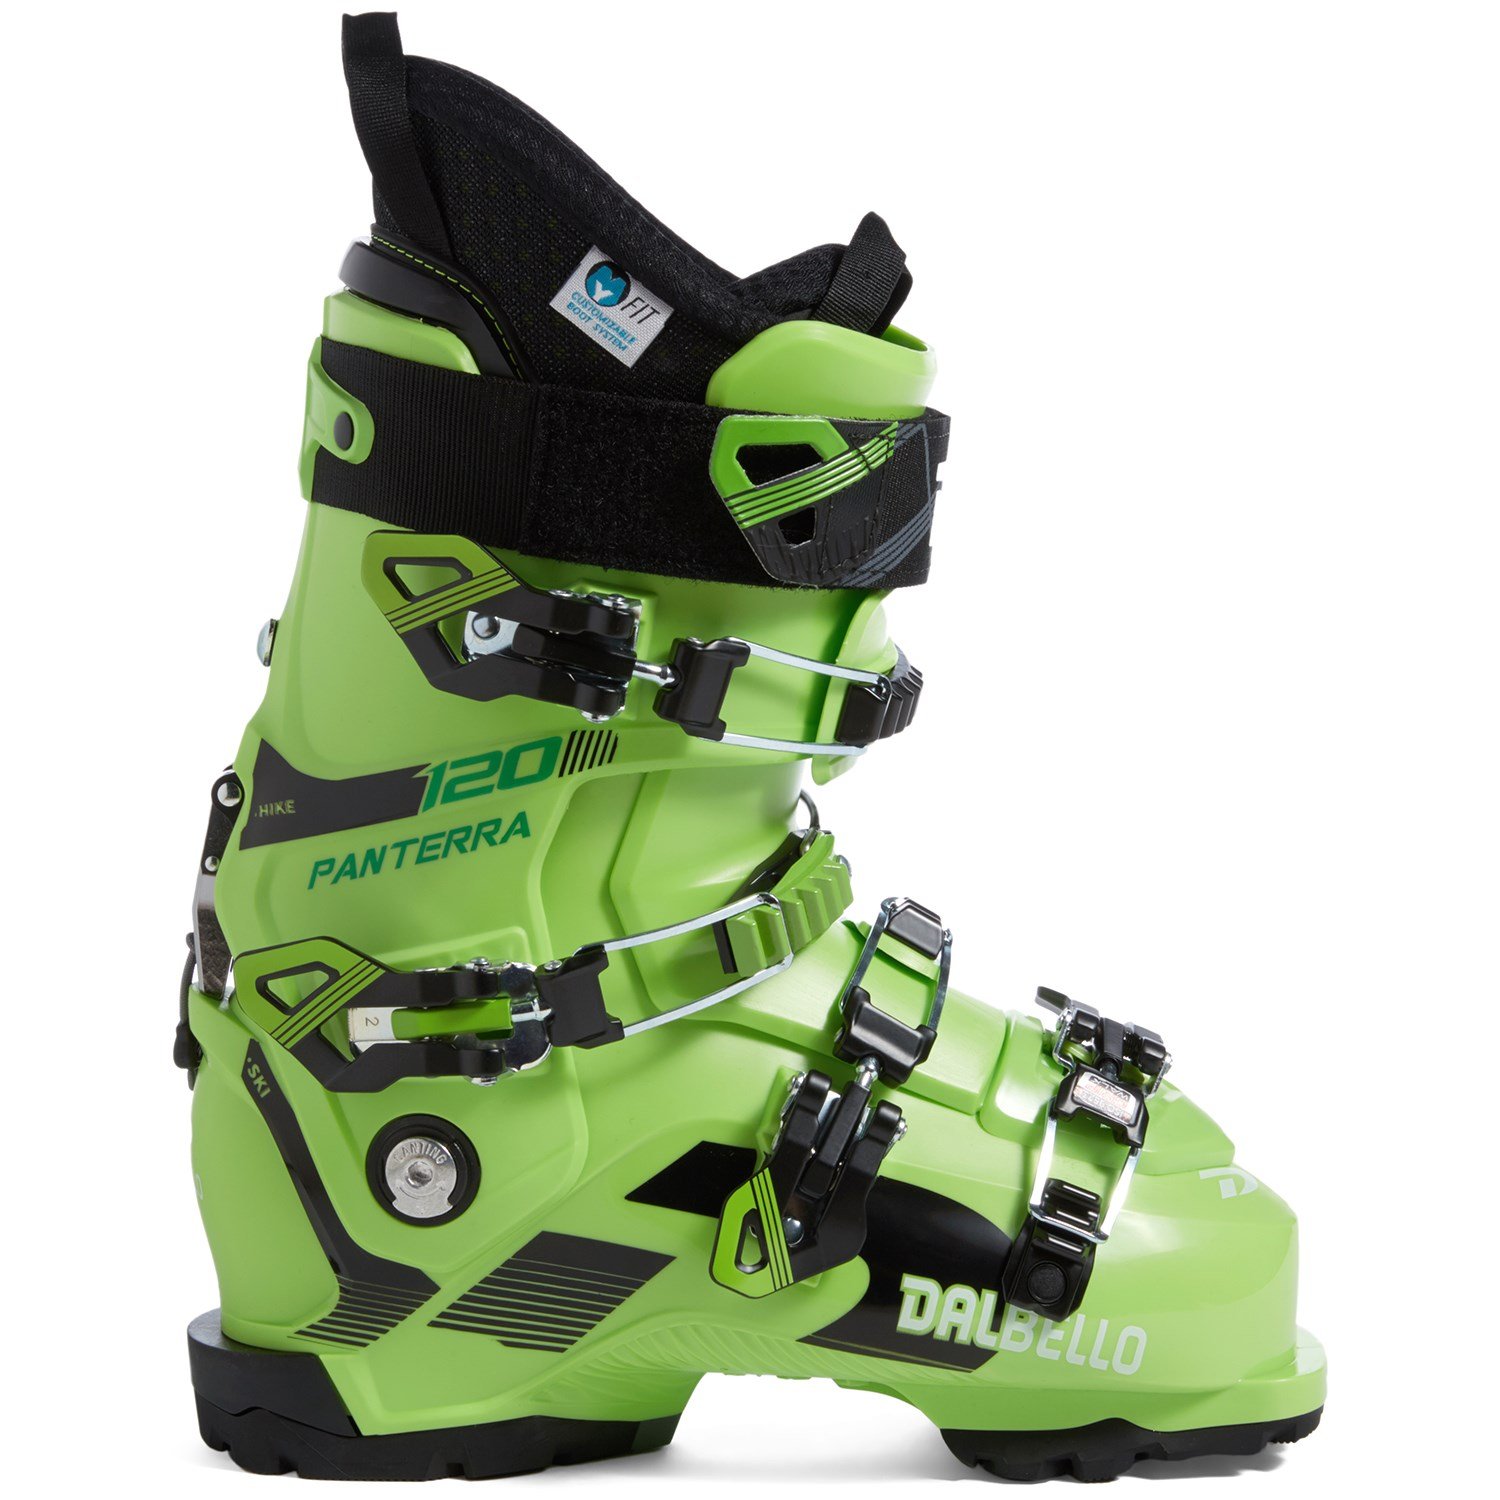 Dalbello Mens Ds Mx 120 Ms Trans/Black Ski Boots